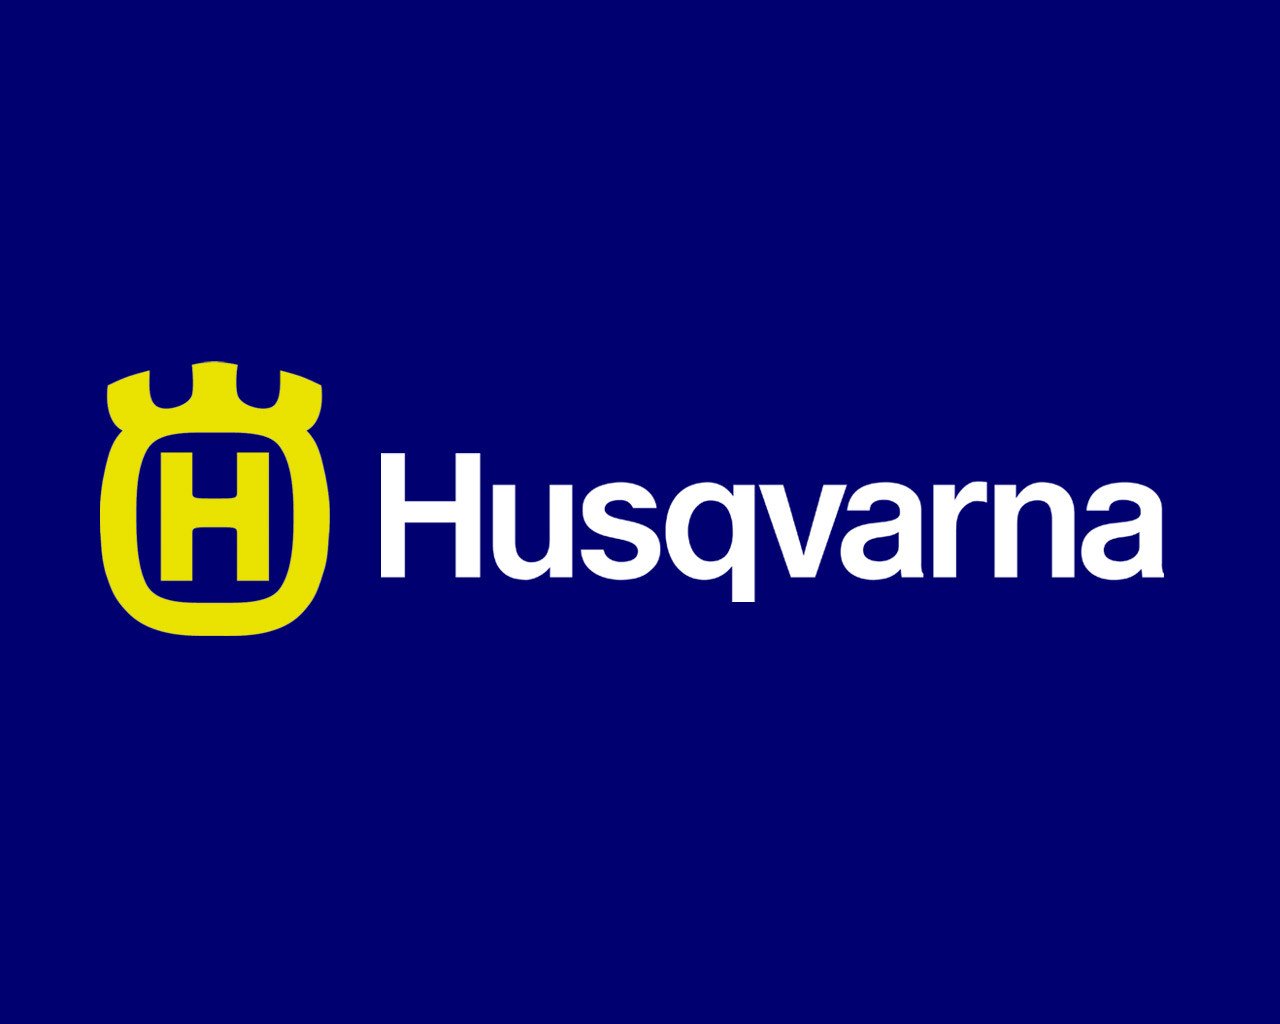 husqvarna logo